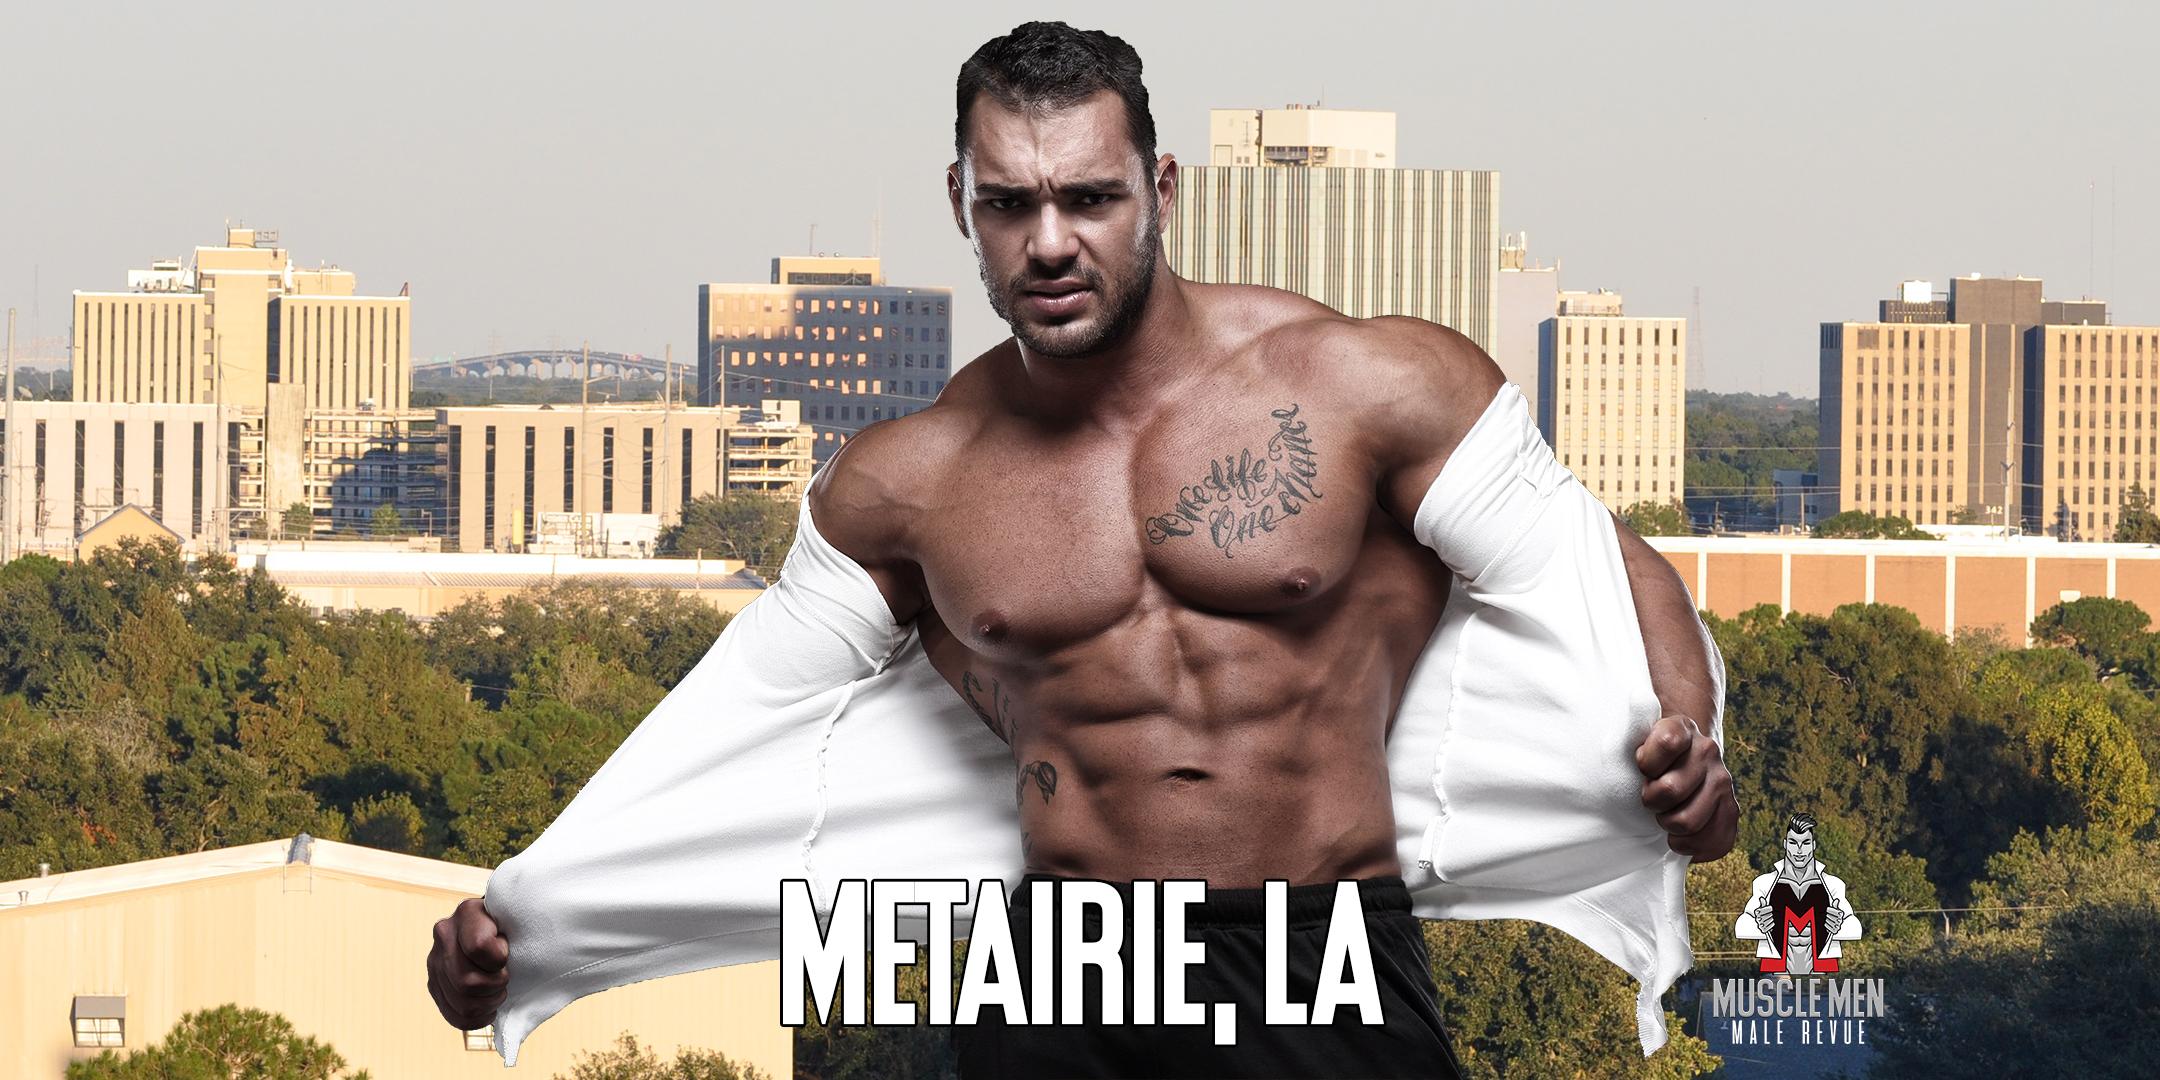 Muscle Men Male Strippers Revue Male Strip Club Shows Metairie La